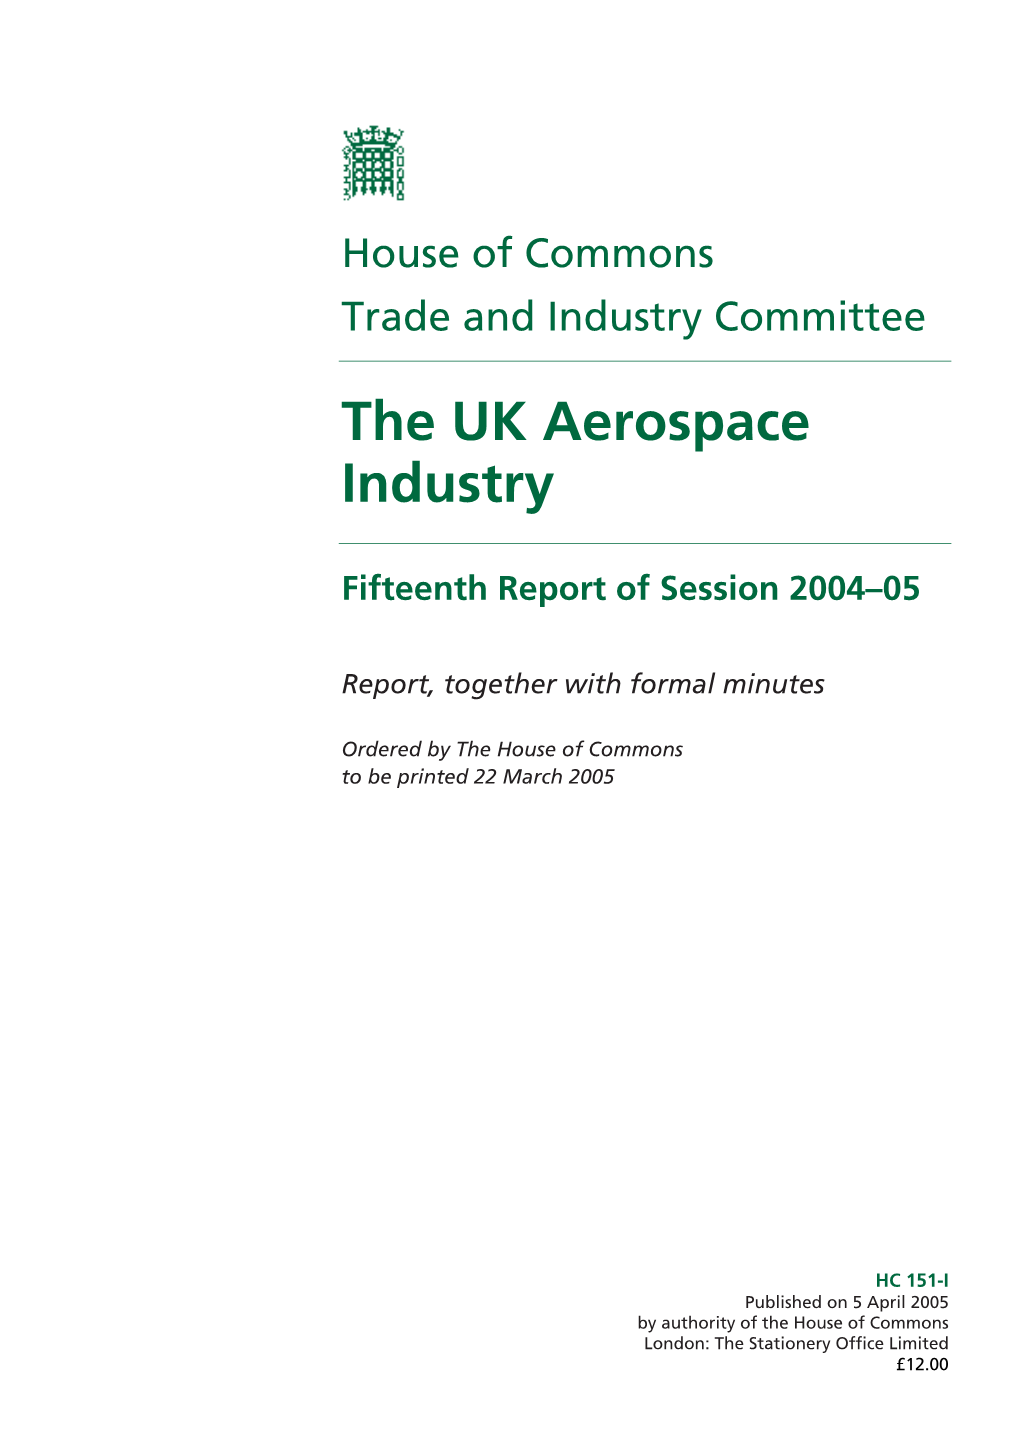 The UK Aerospace Industry